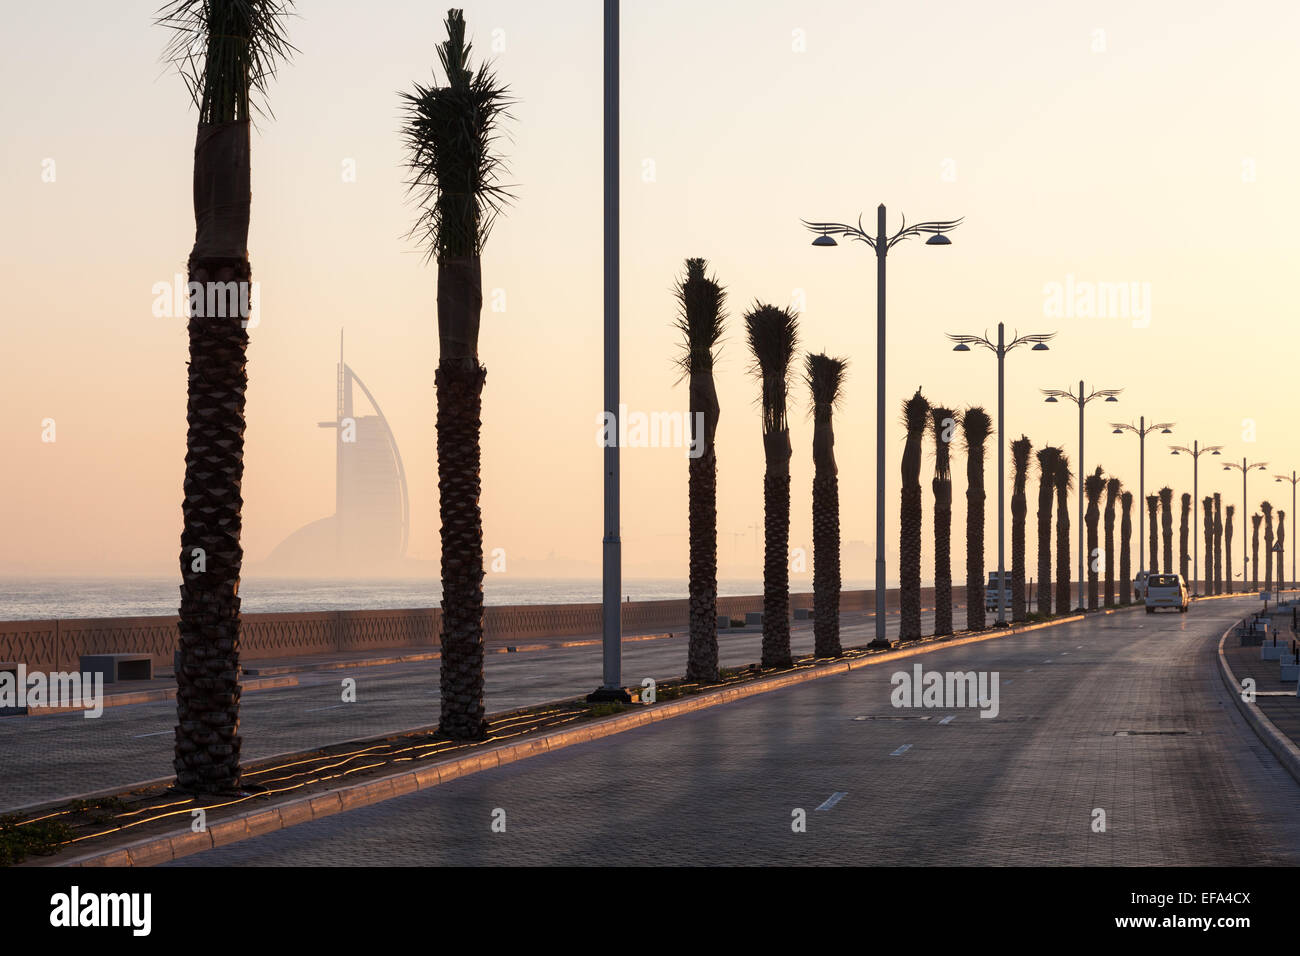 Palm trees alley at the Palm Jumeirah, Dubai, United Arab Emirates Stock Photo